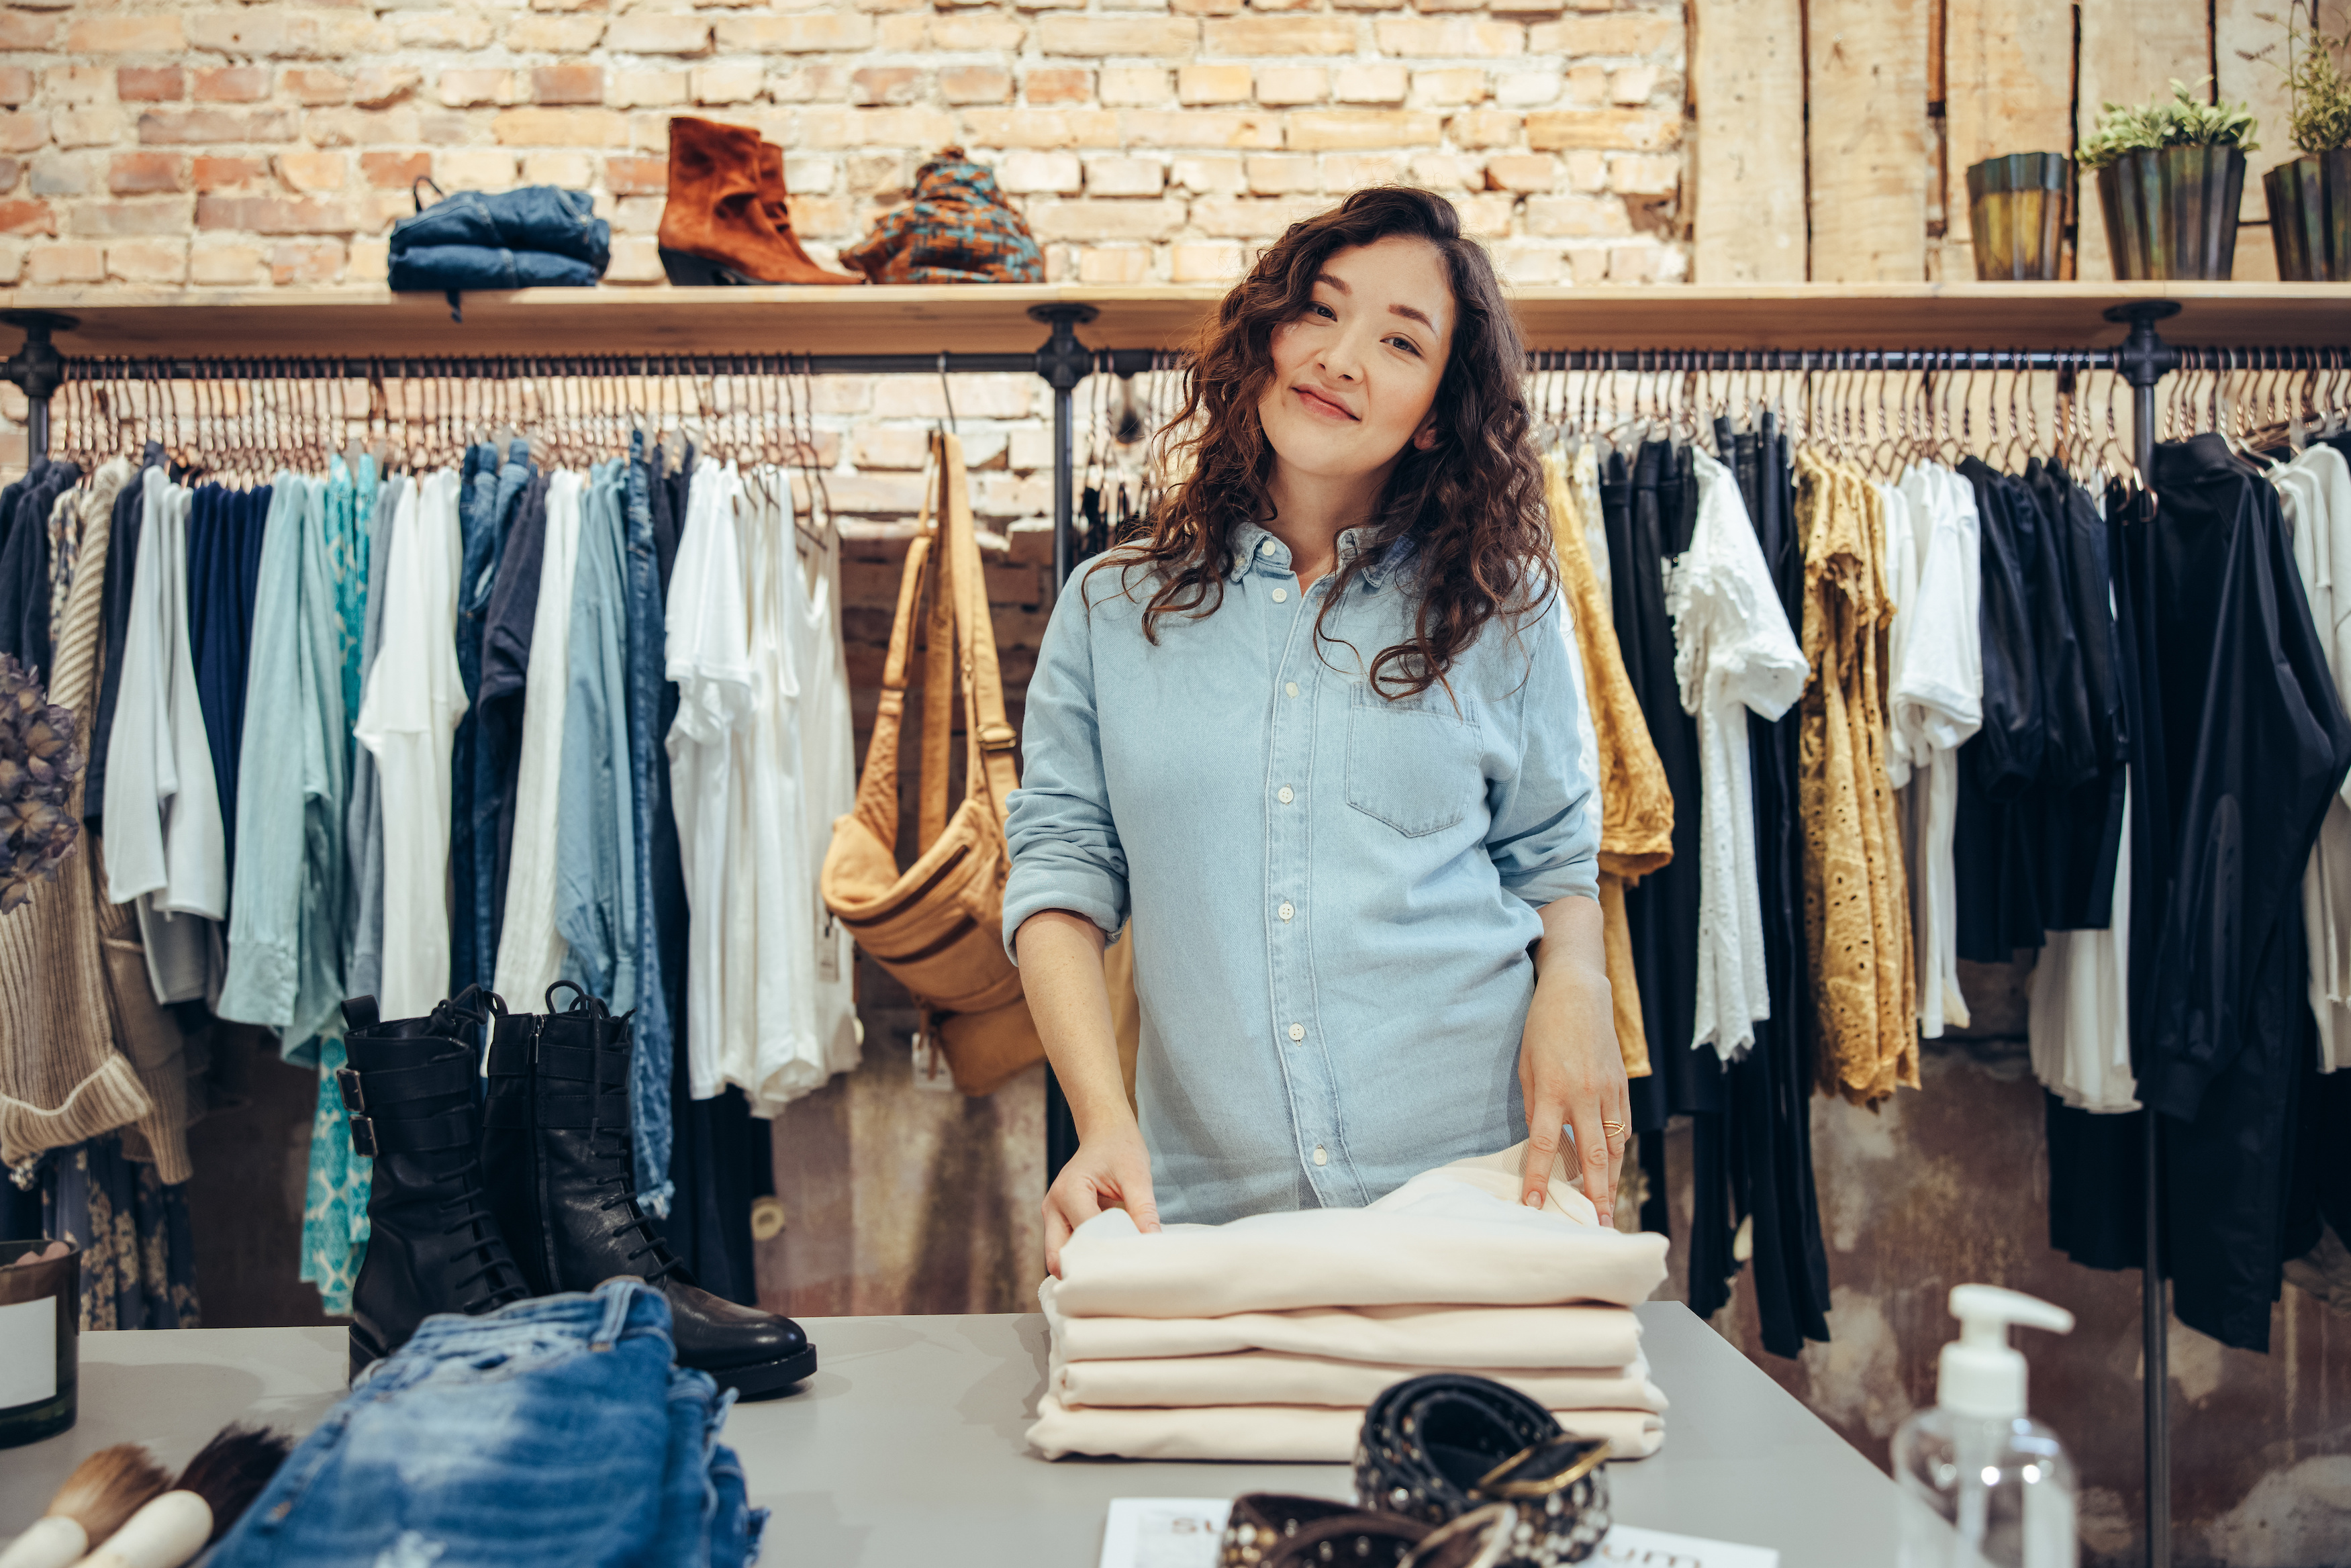 4 Retail Skills You Can Take to Future Jobs - Style Nine to Five